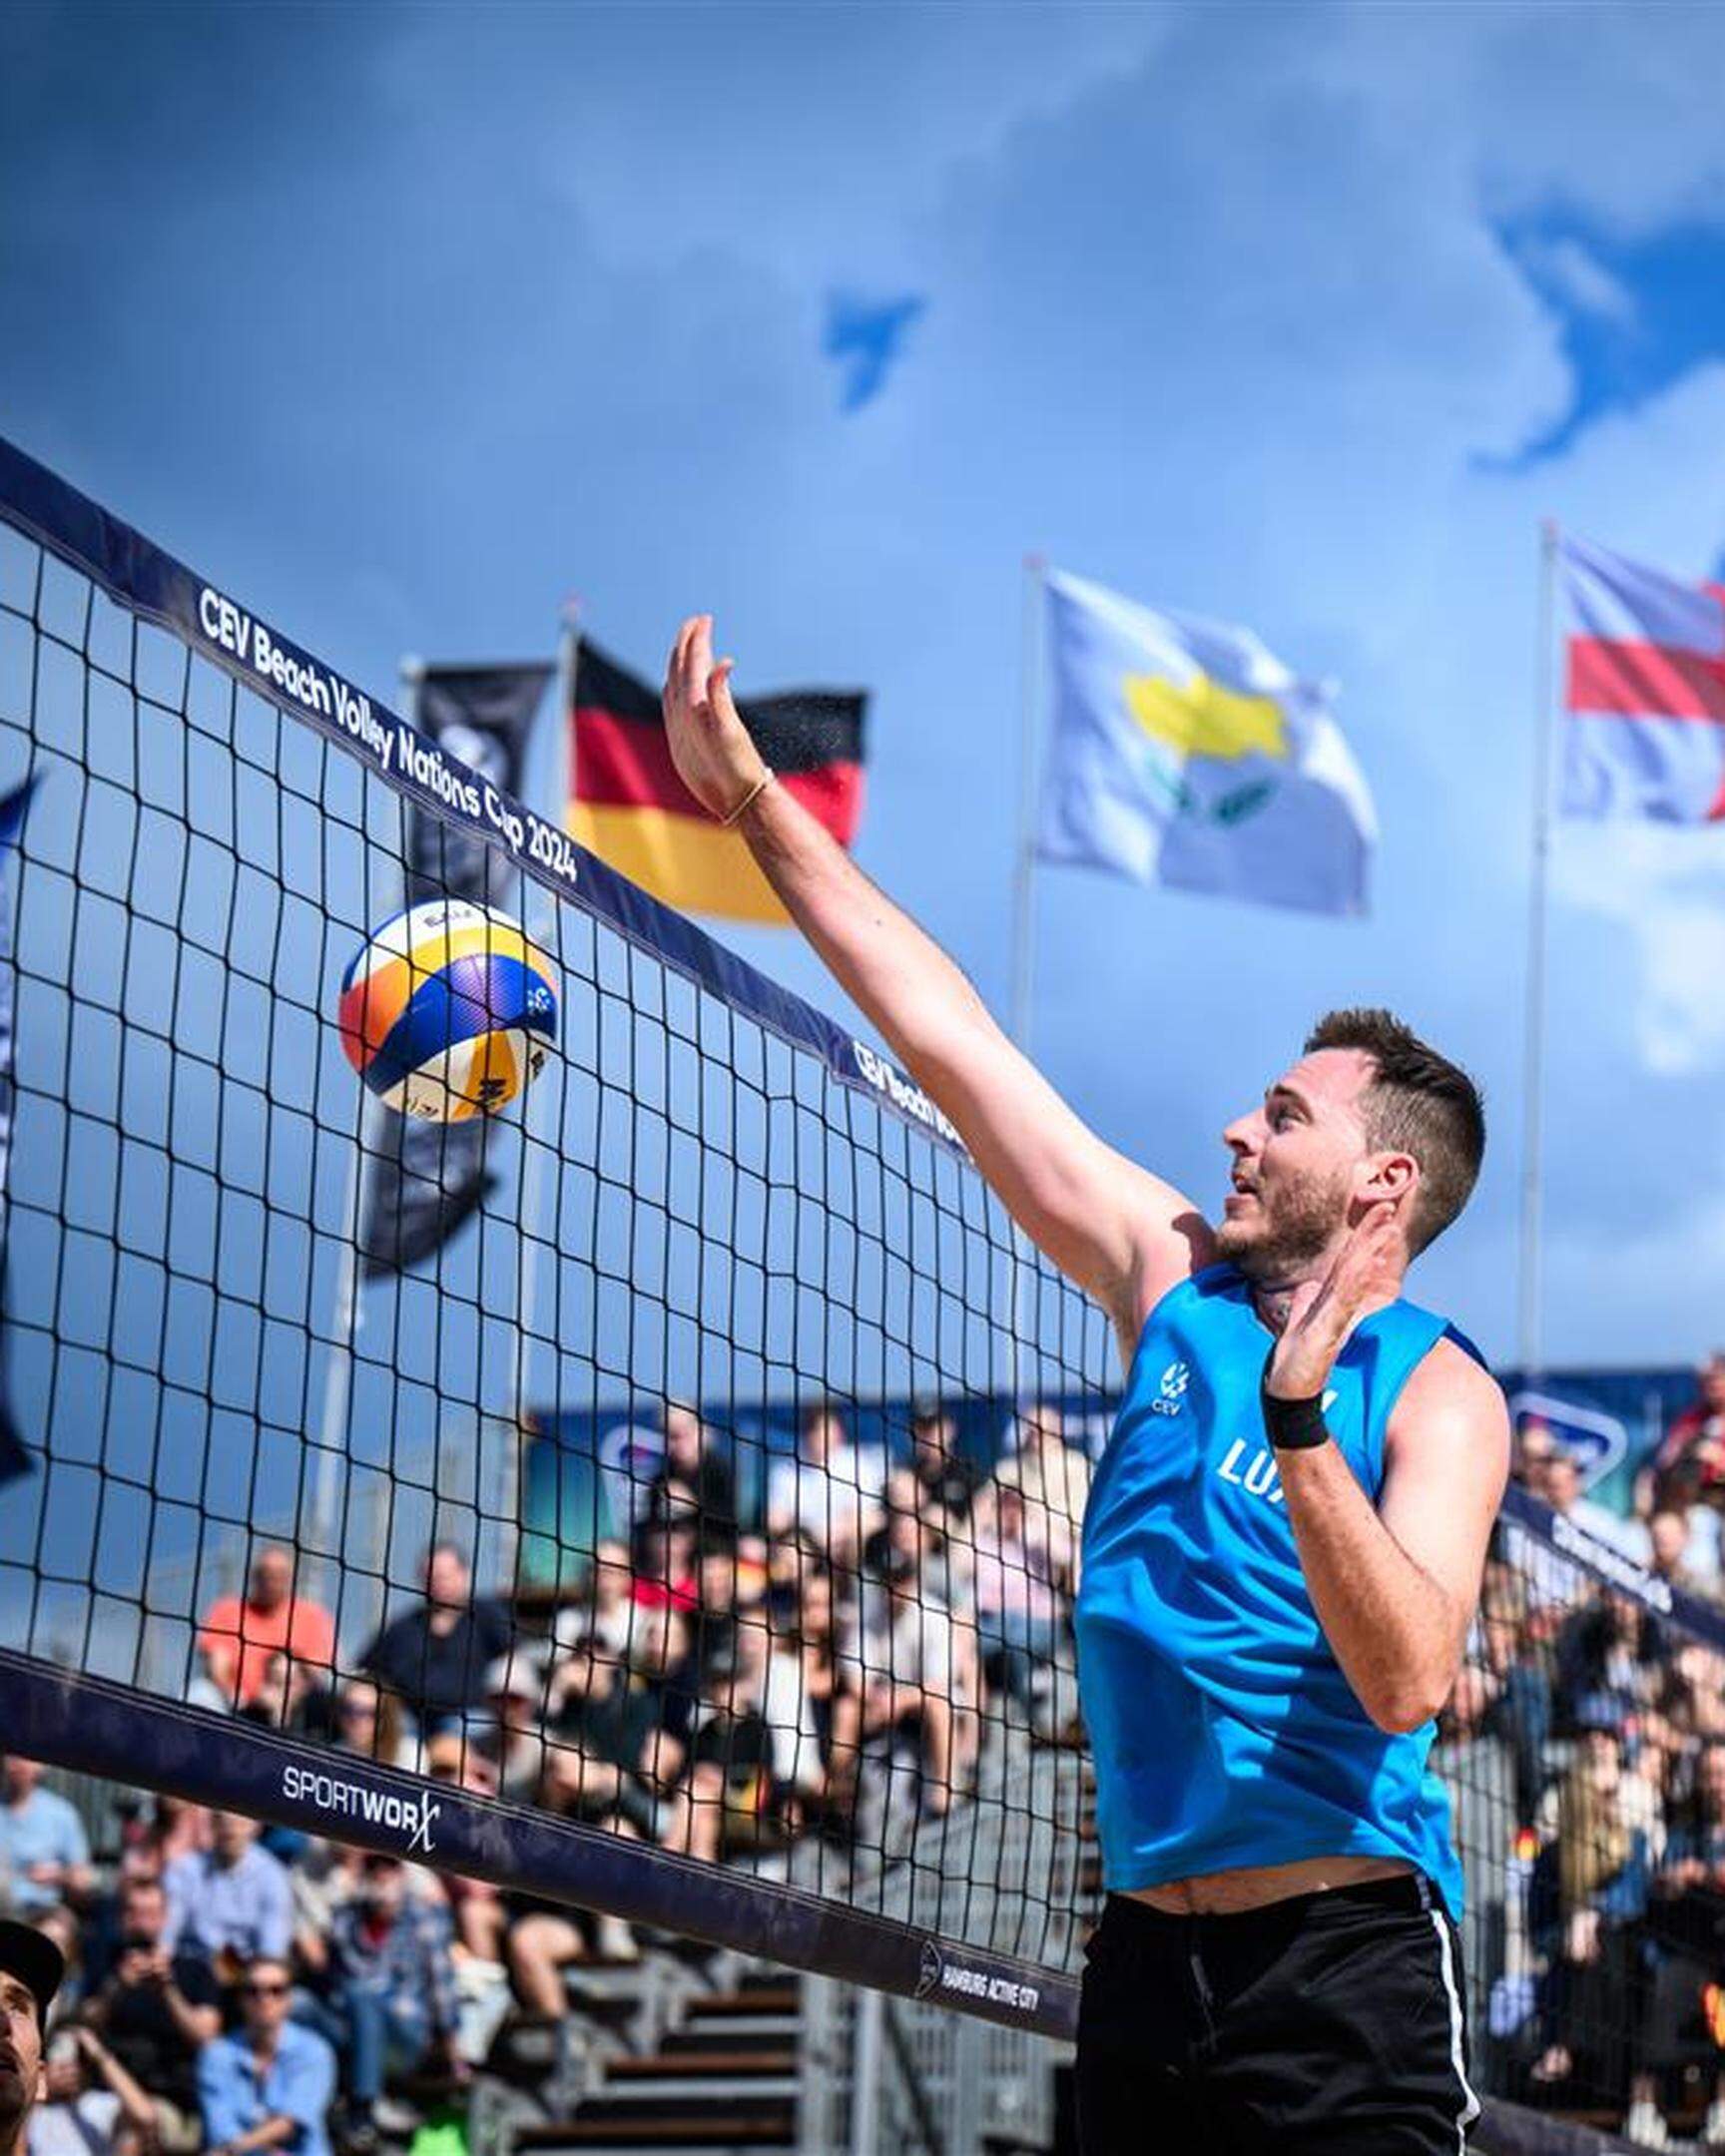 Chris Zender genoss die Atmosphäre beim Beach Volley Nations Cup in Hamburg.